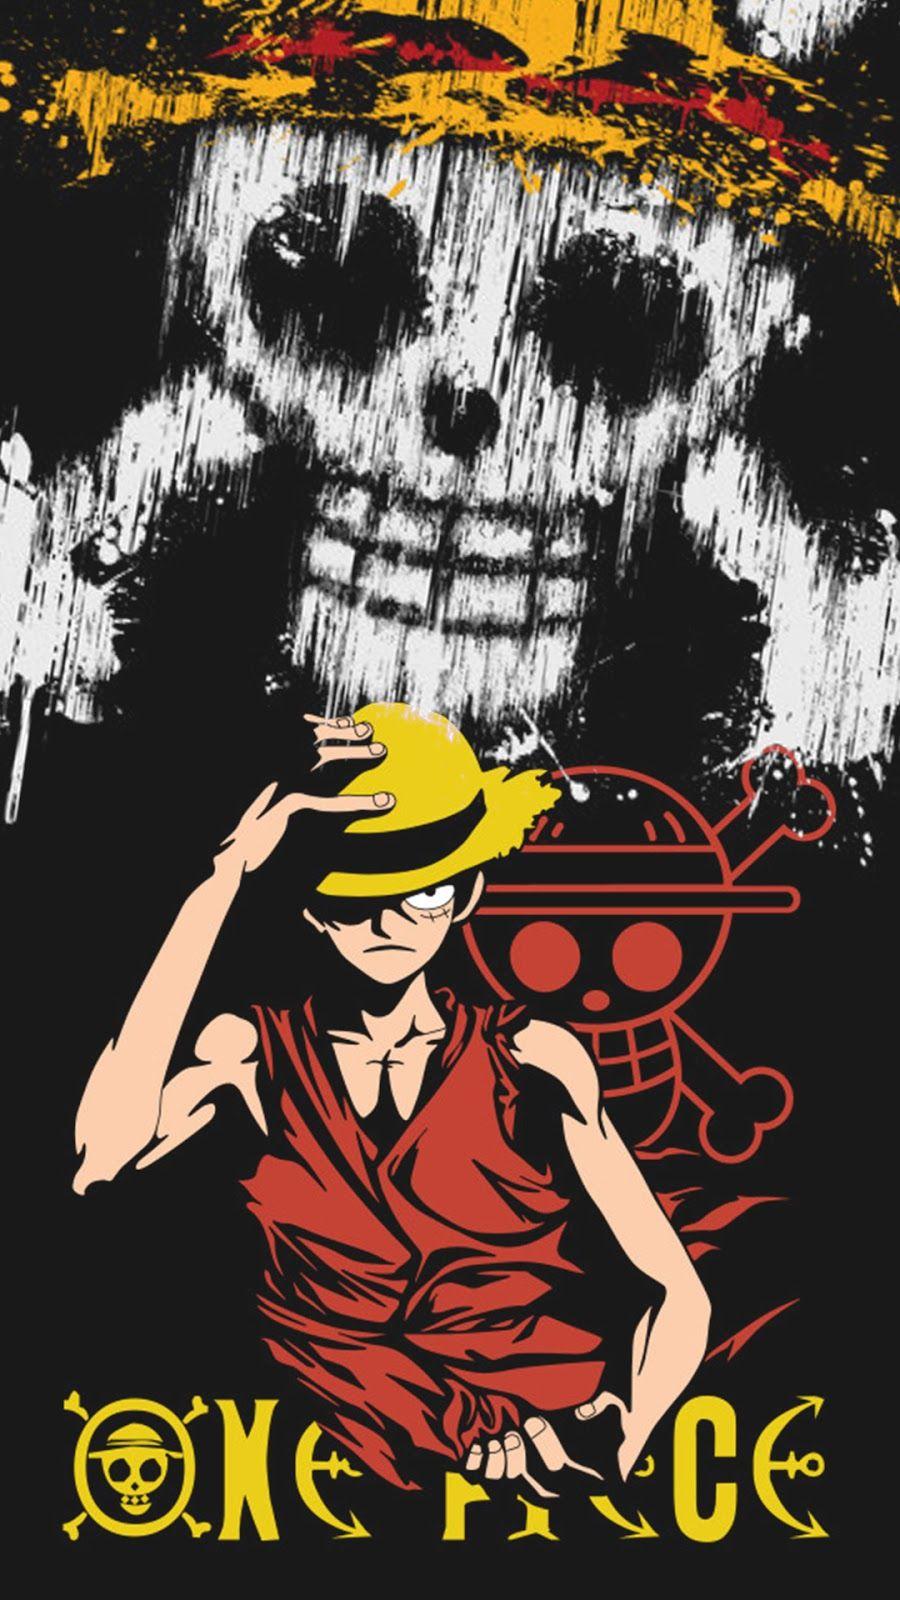 Gambar Wallpaper Keren One Piece gambar ke 1